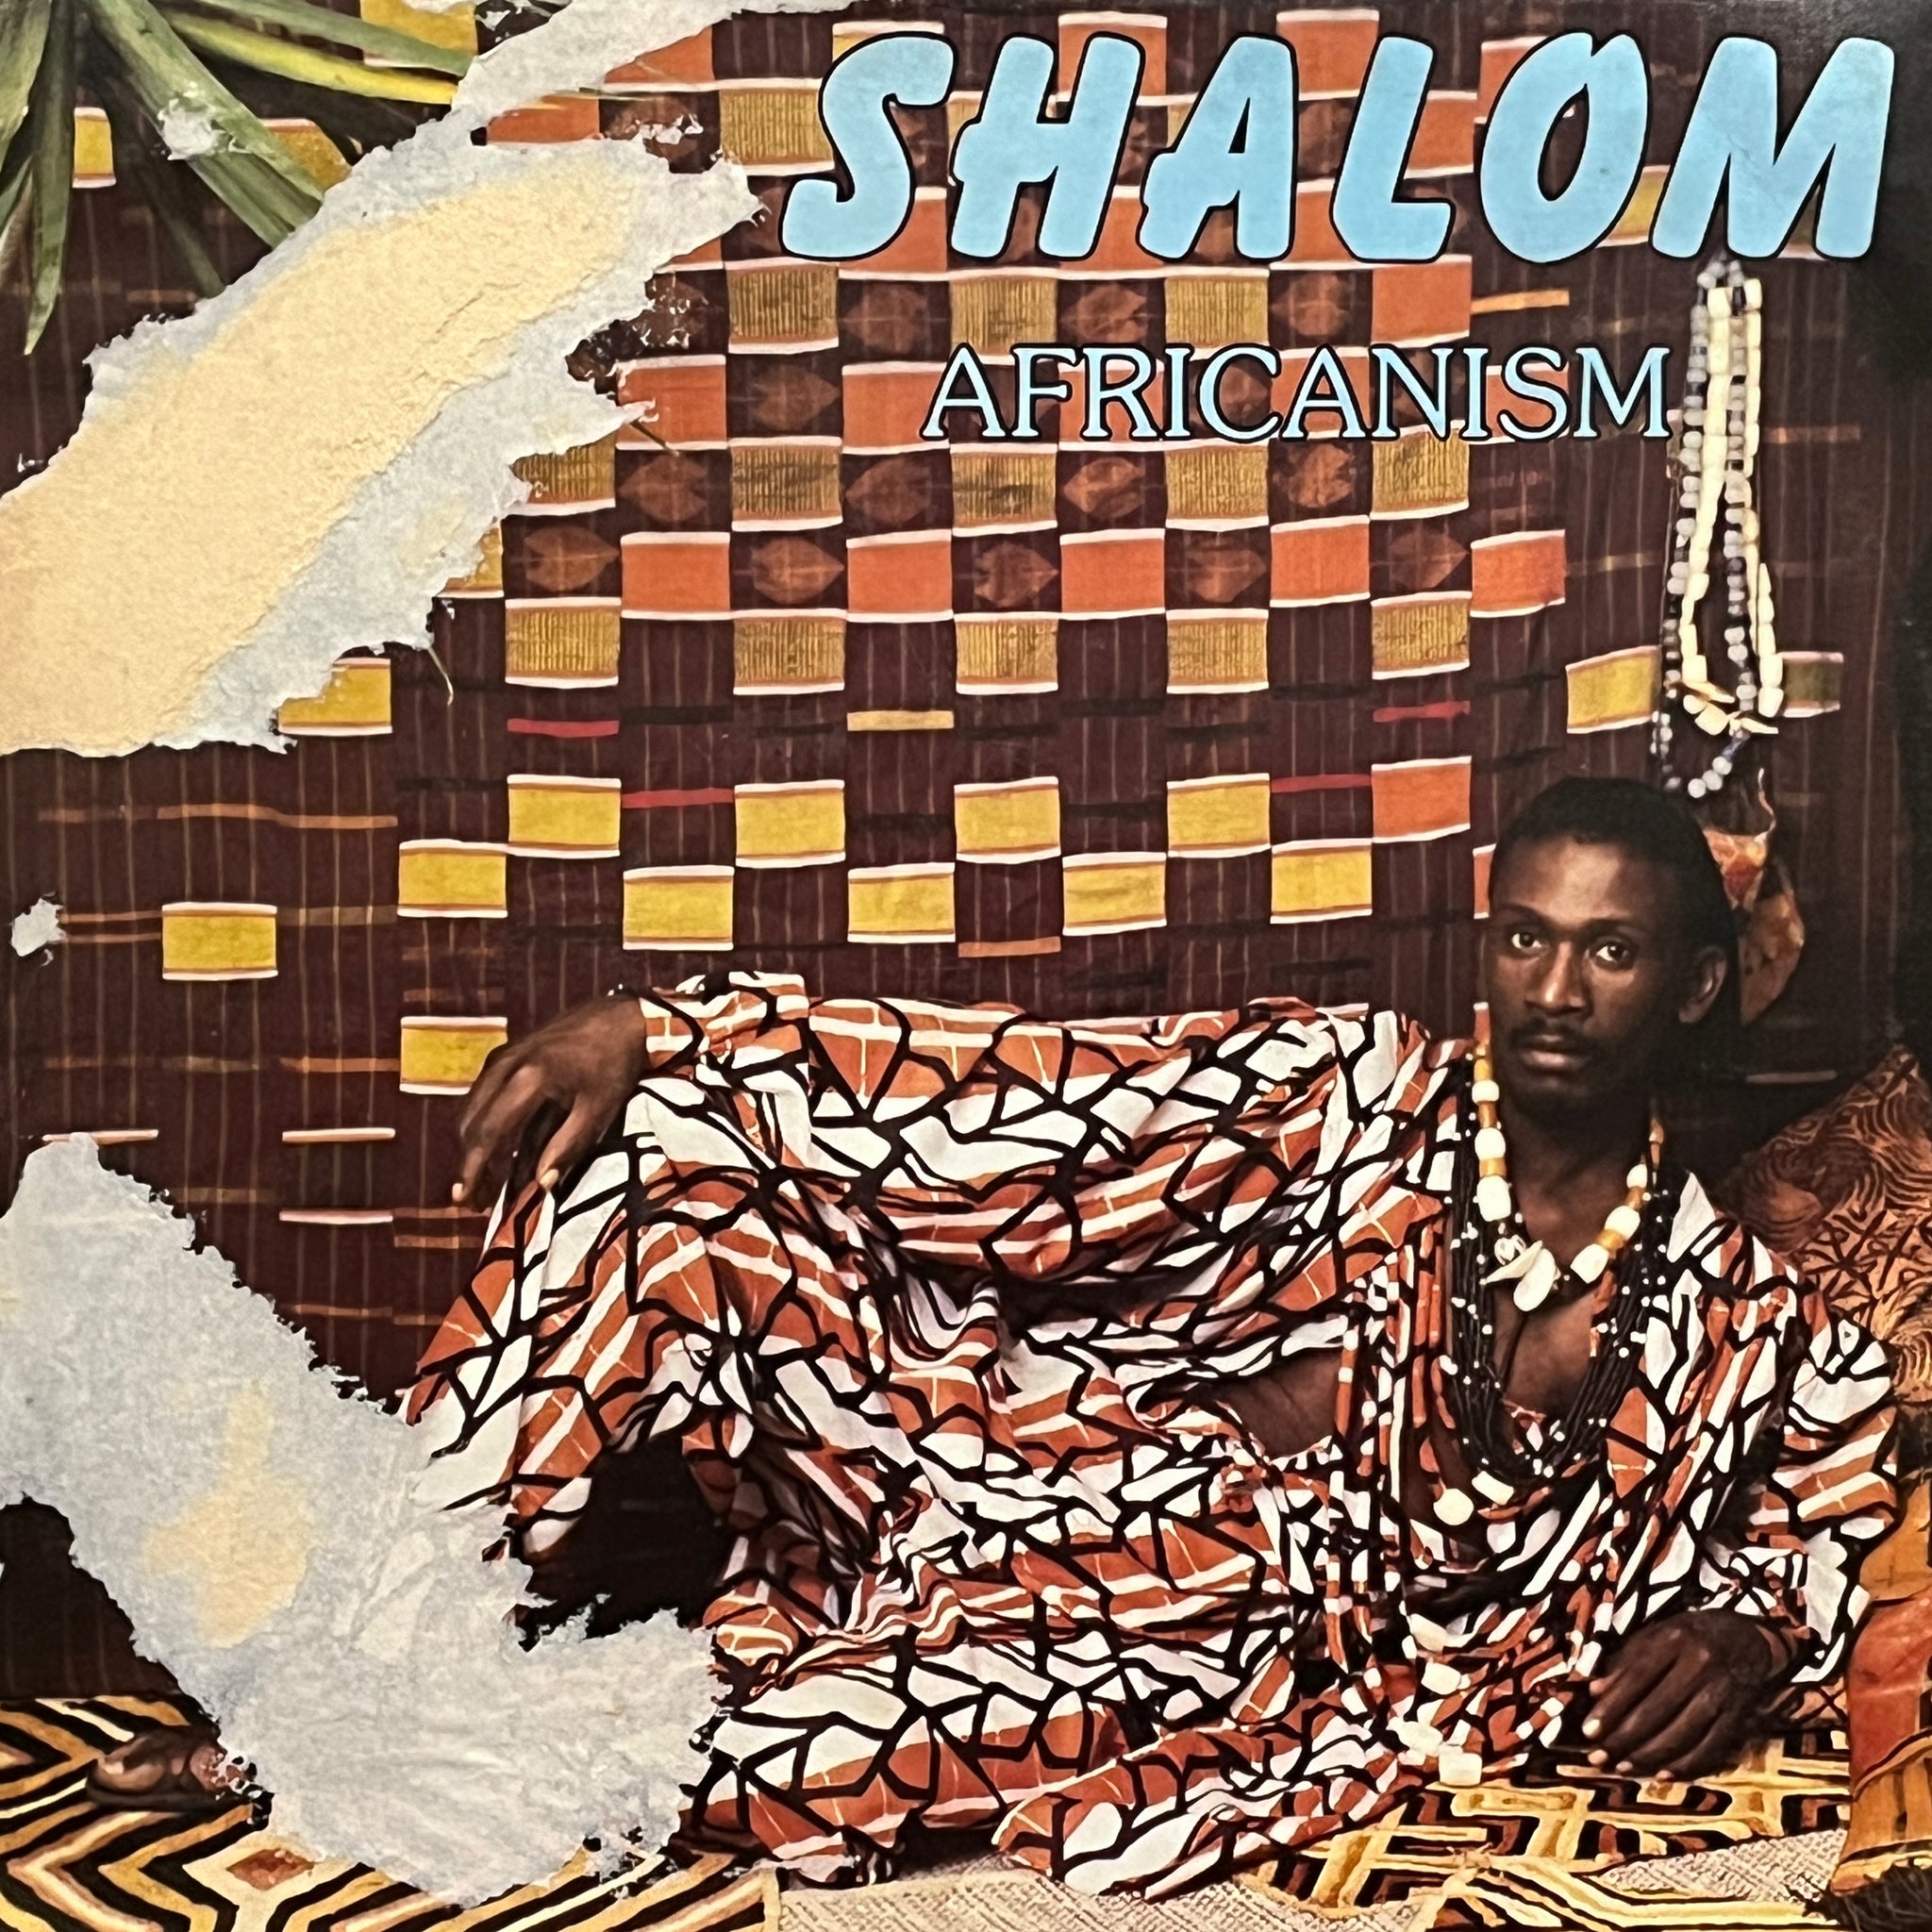 Shalom – Africanism